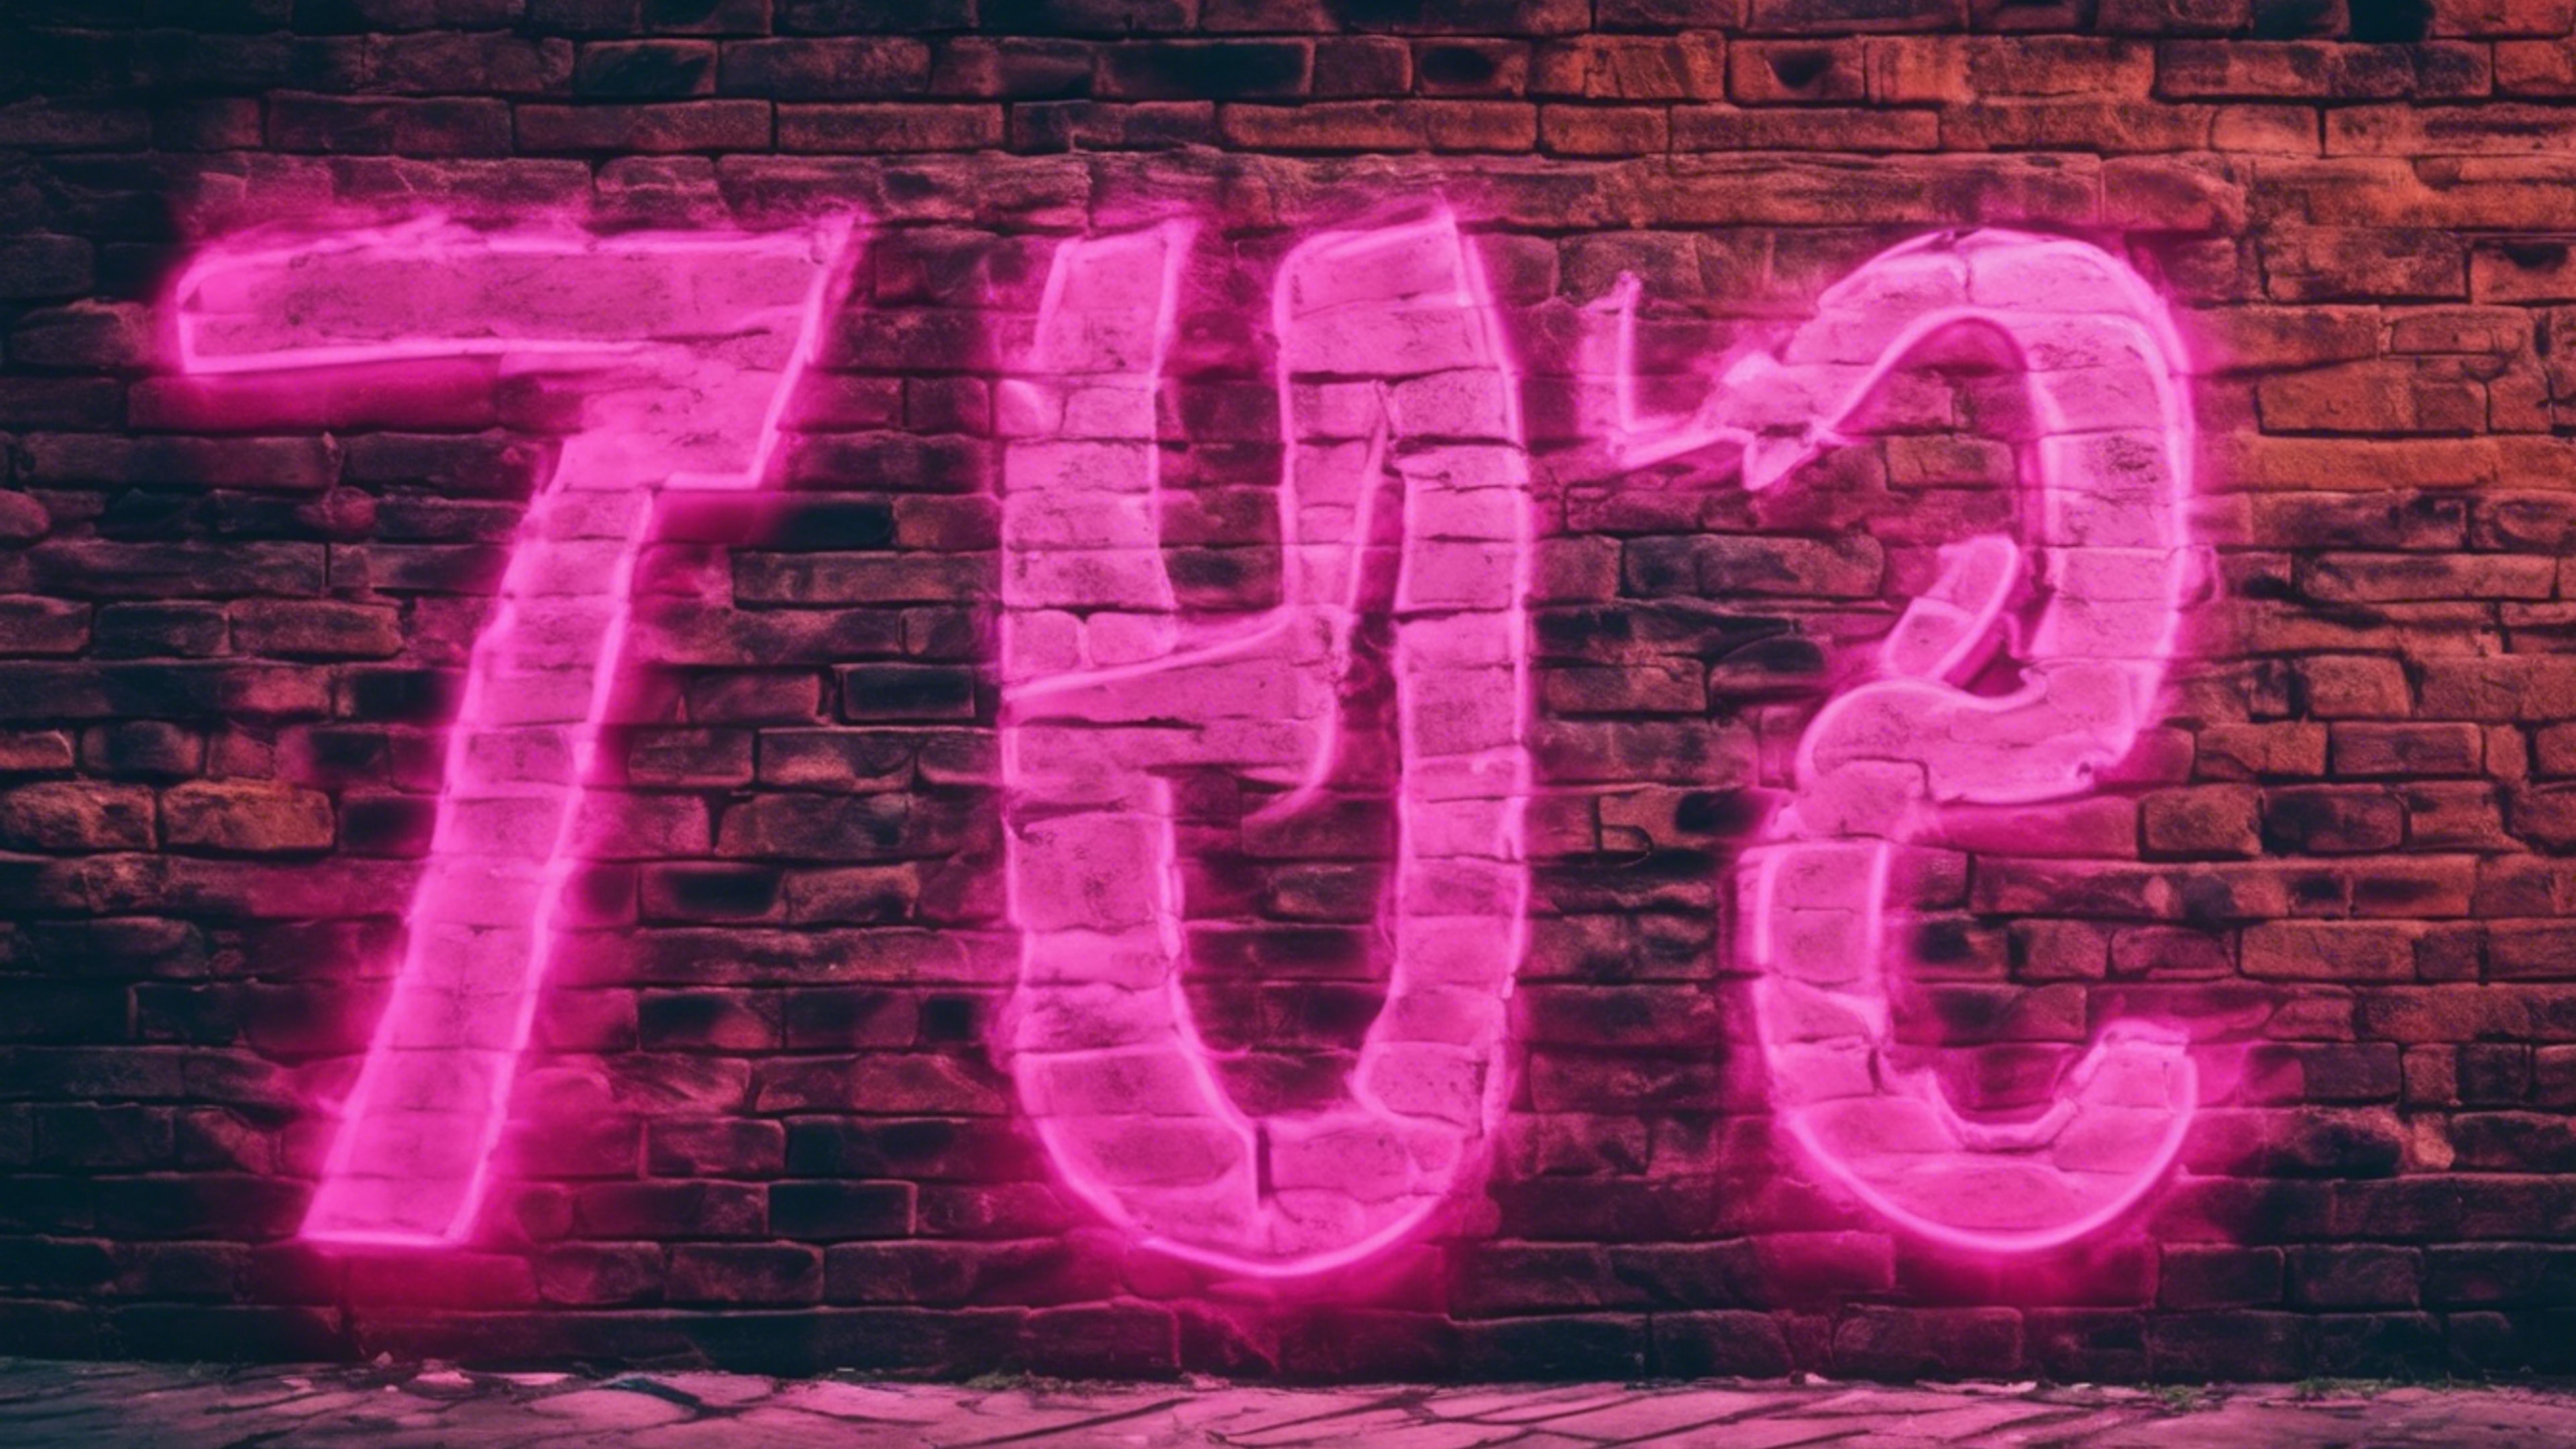 A bright neon pink graffiti on an old brick wall in an urban setting. Wallpaper[f64c7f440a704c87afc0]